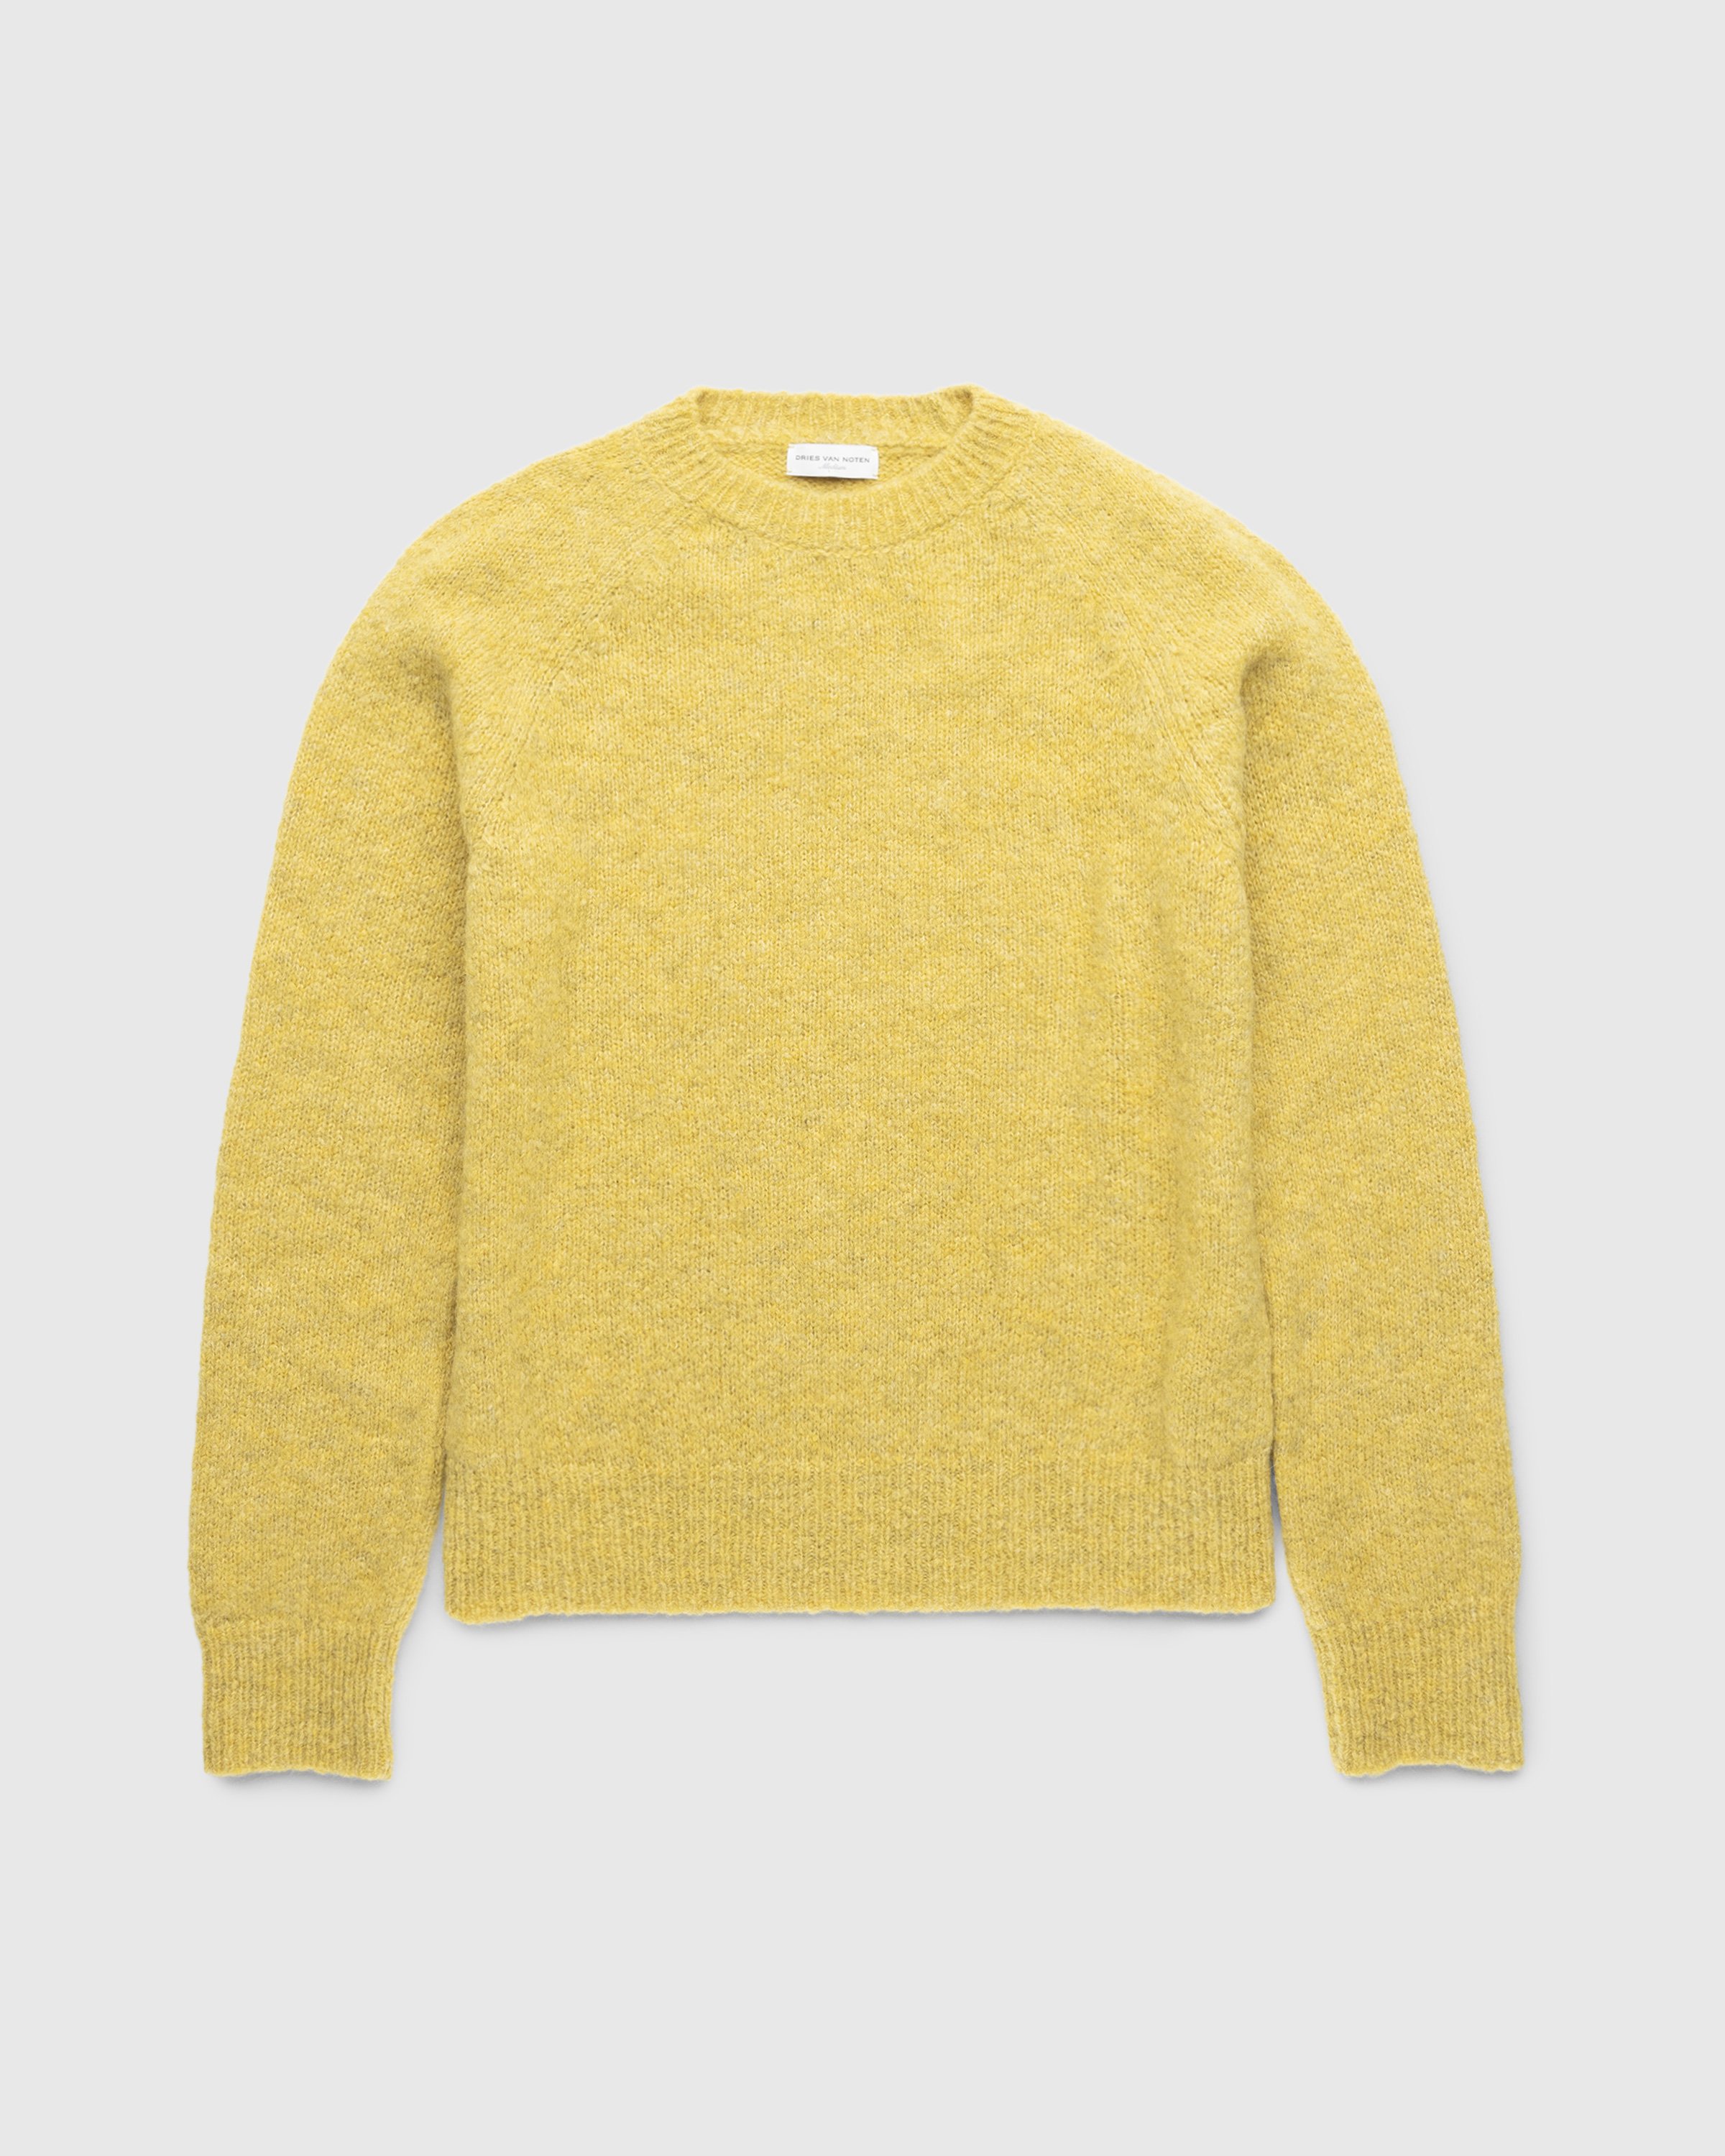 Dries van Noten - Melbourne Knit Yellow - Clothing - Yellow - Image 1